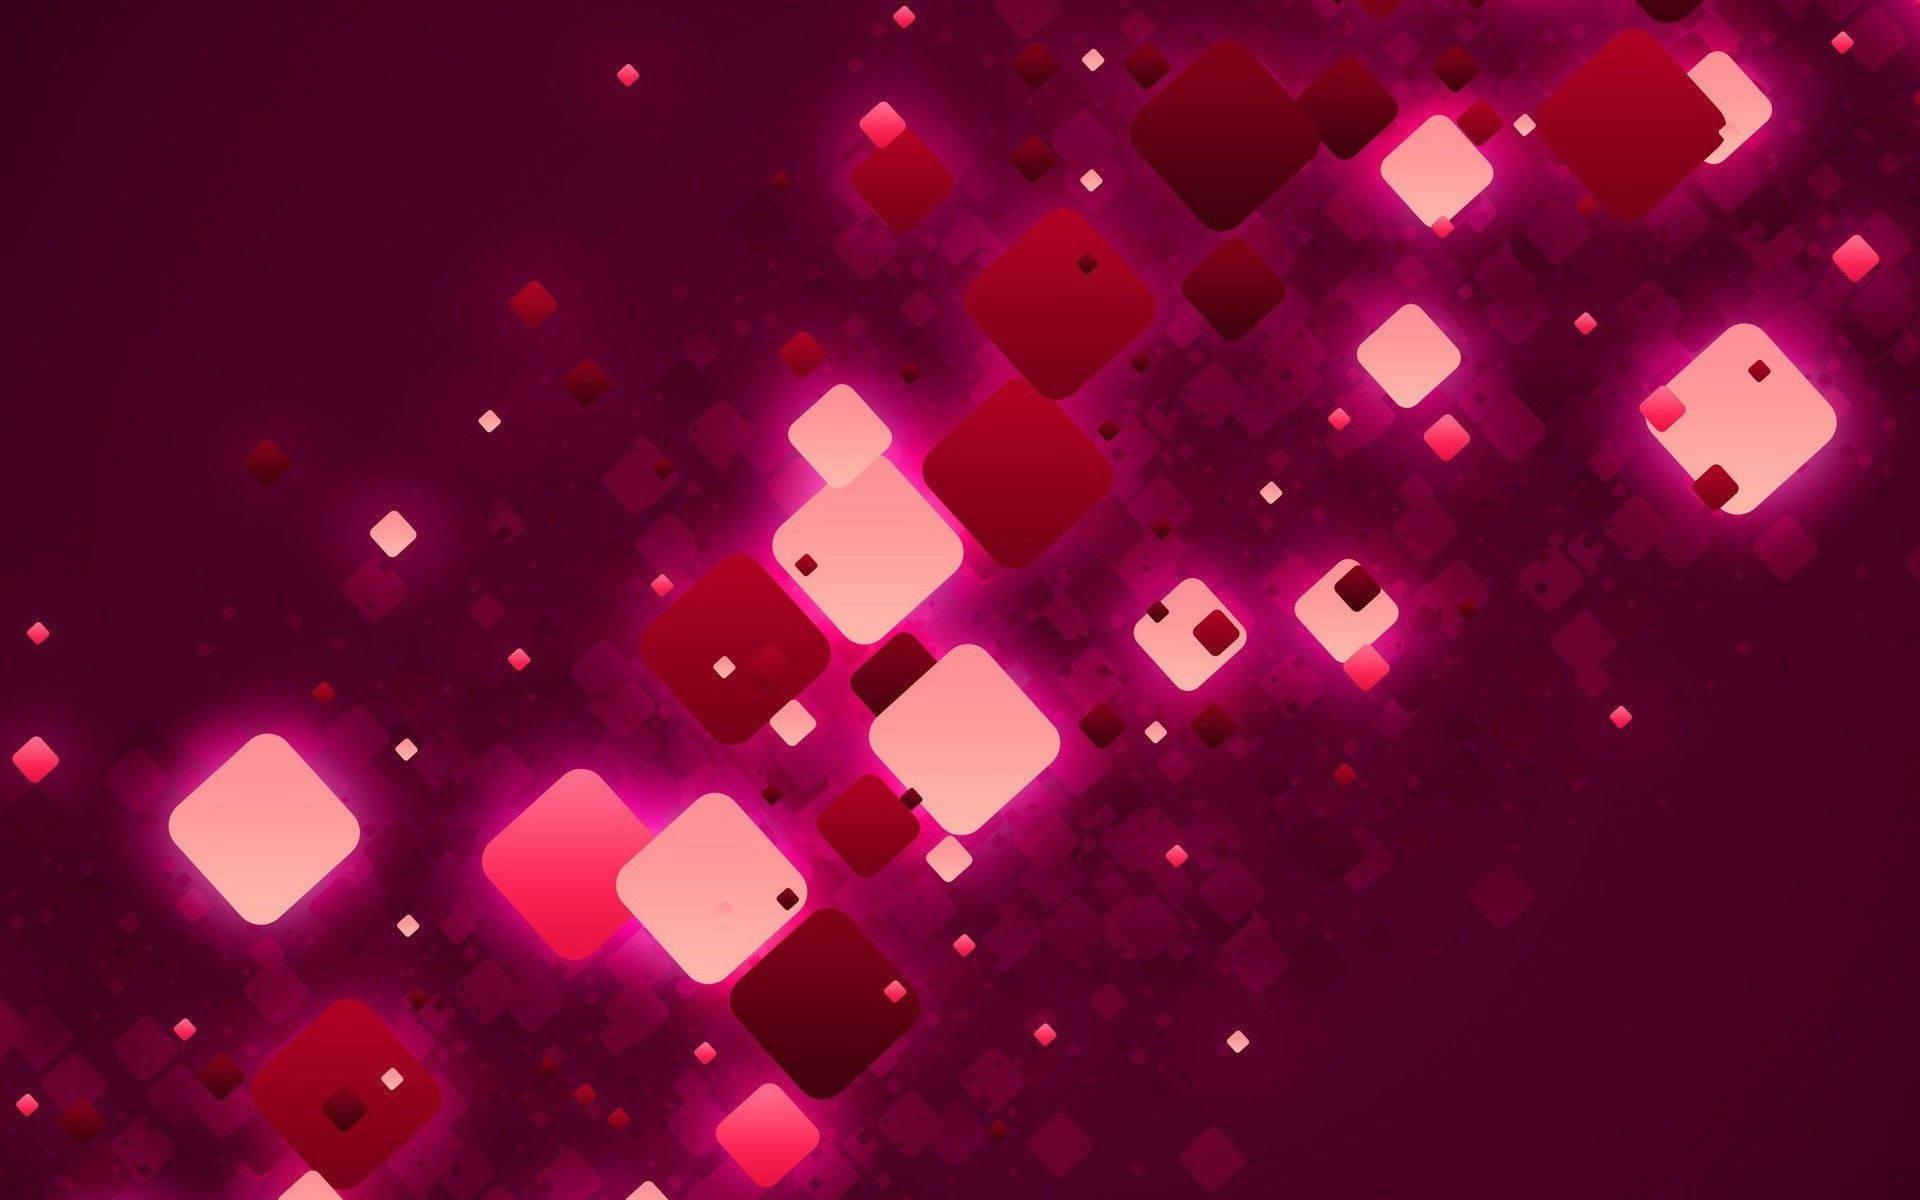 Pink Glowing Squares Digital Art Background